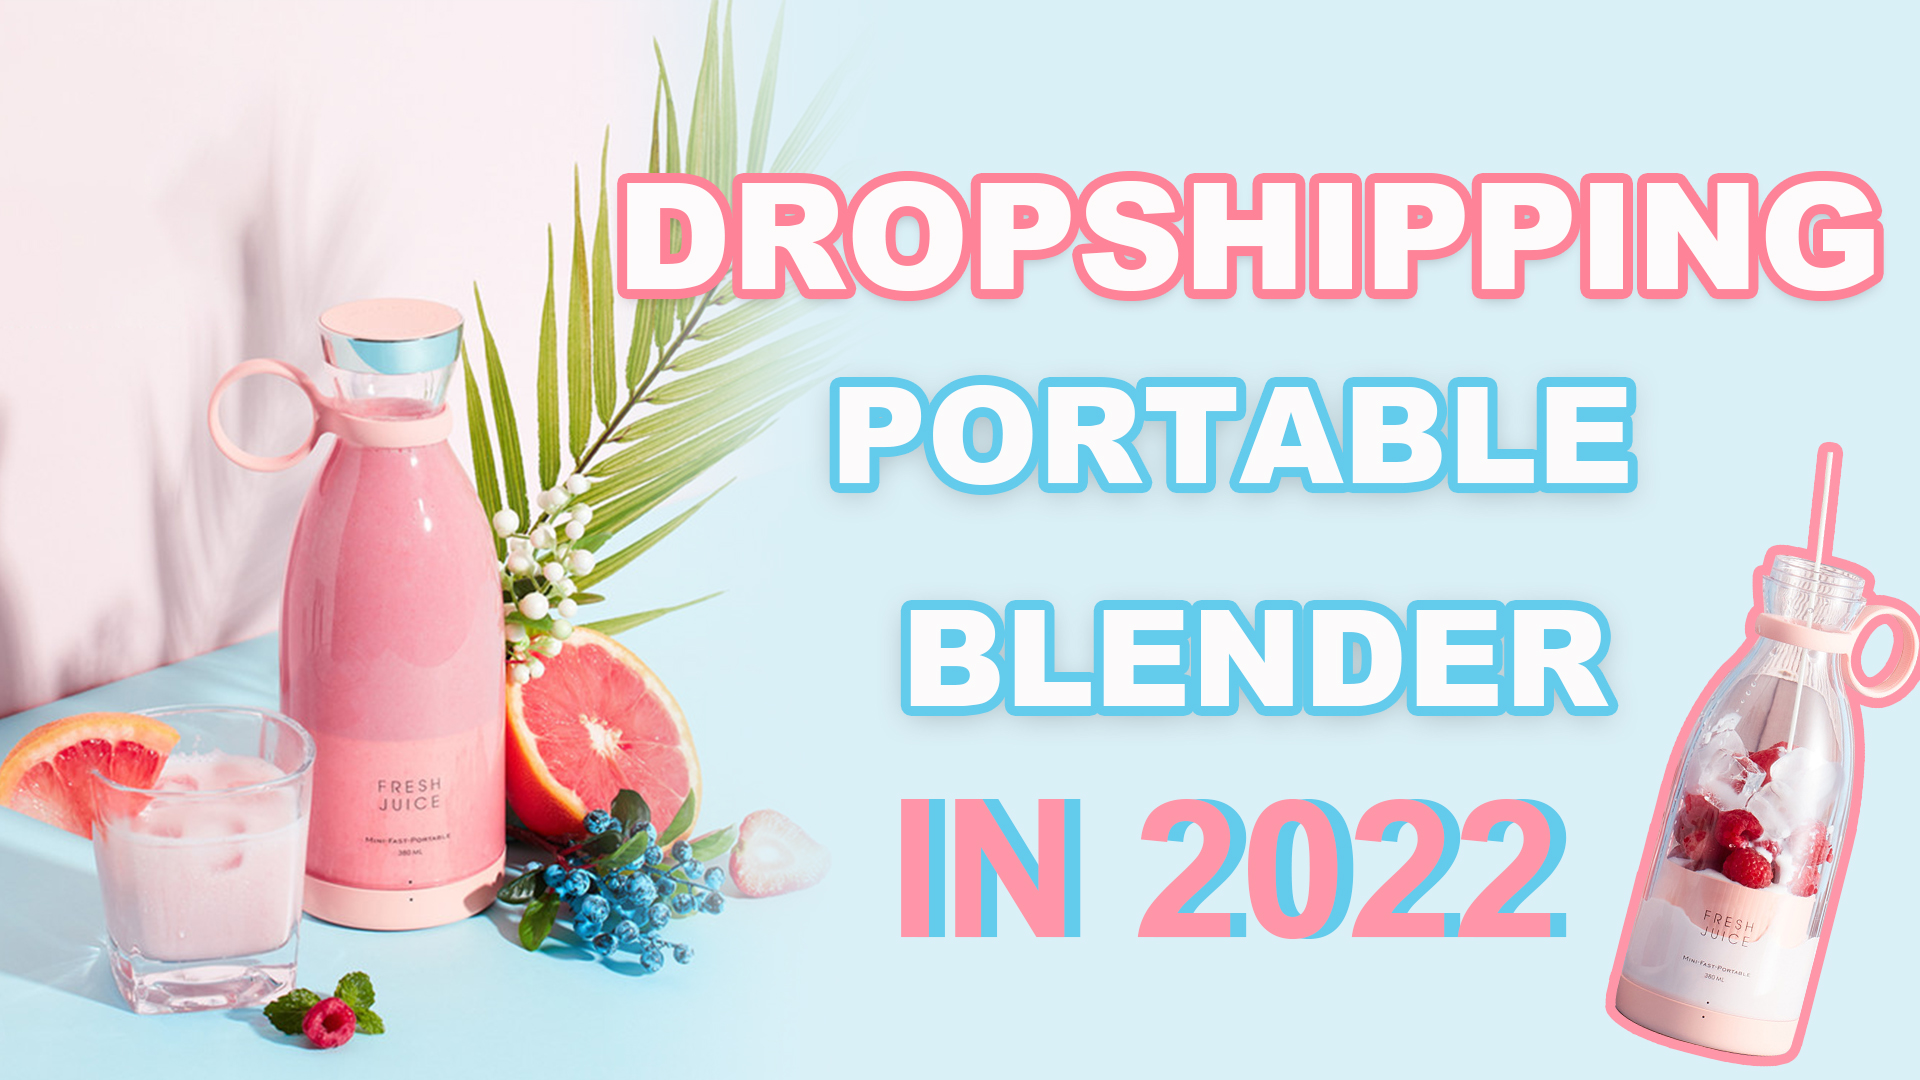 Fresh Juice Portable Blender, Black